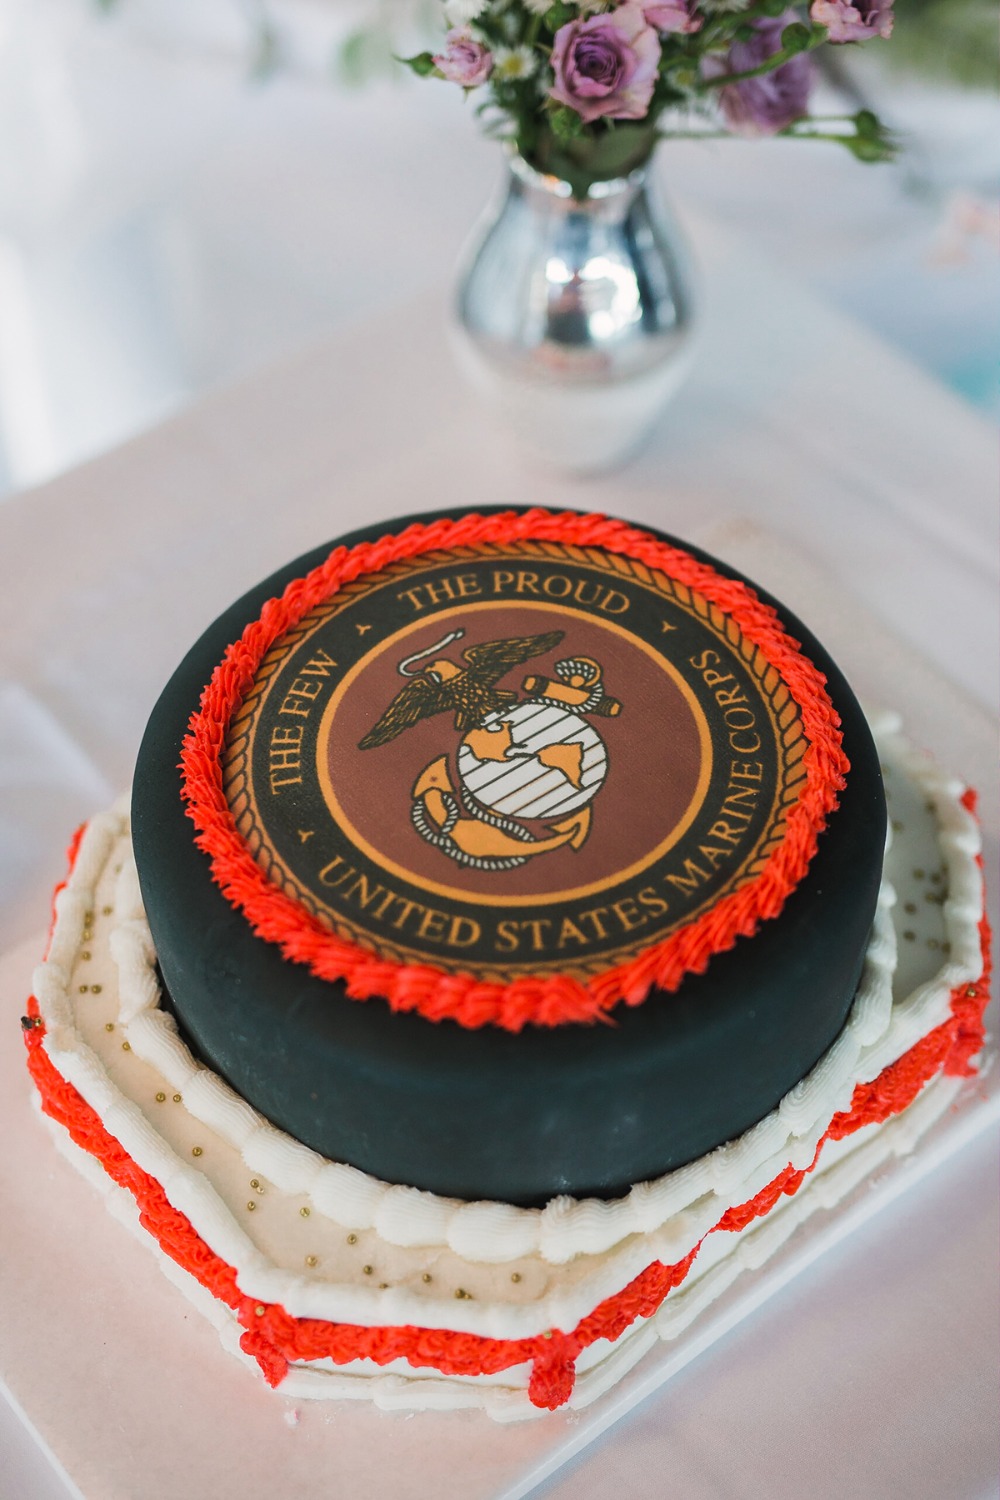 United States Marine Corps grooms cake